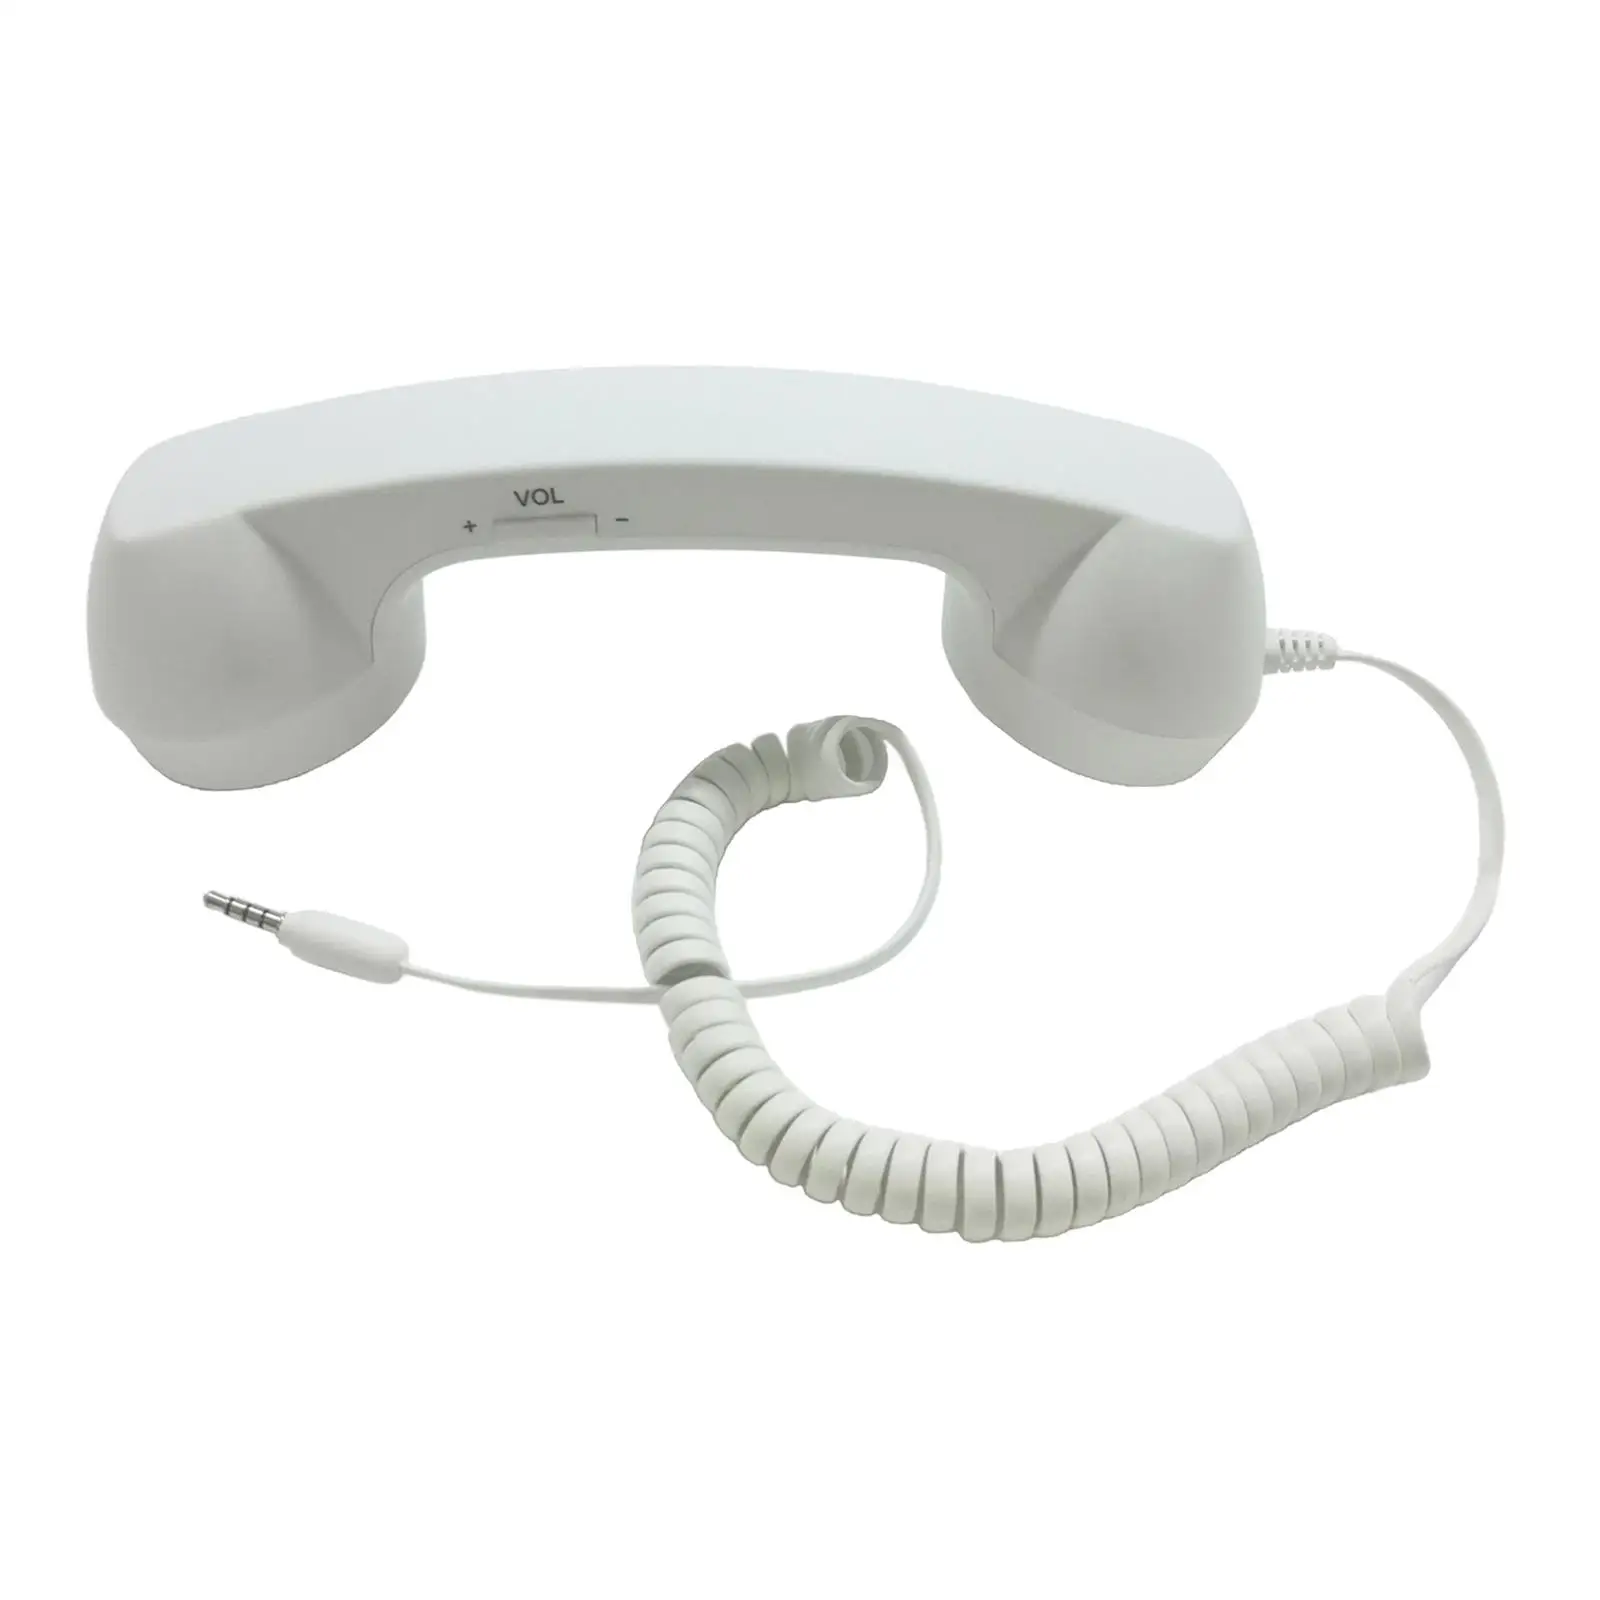 Retro Telephone Handset 3.5mm Classic Mini for   Mobile Phones